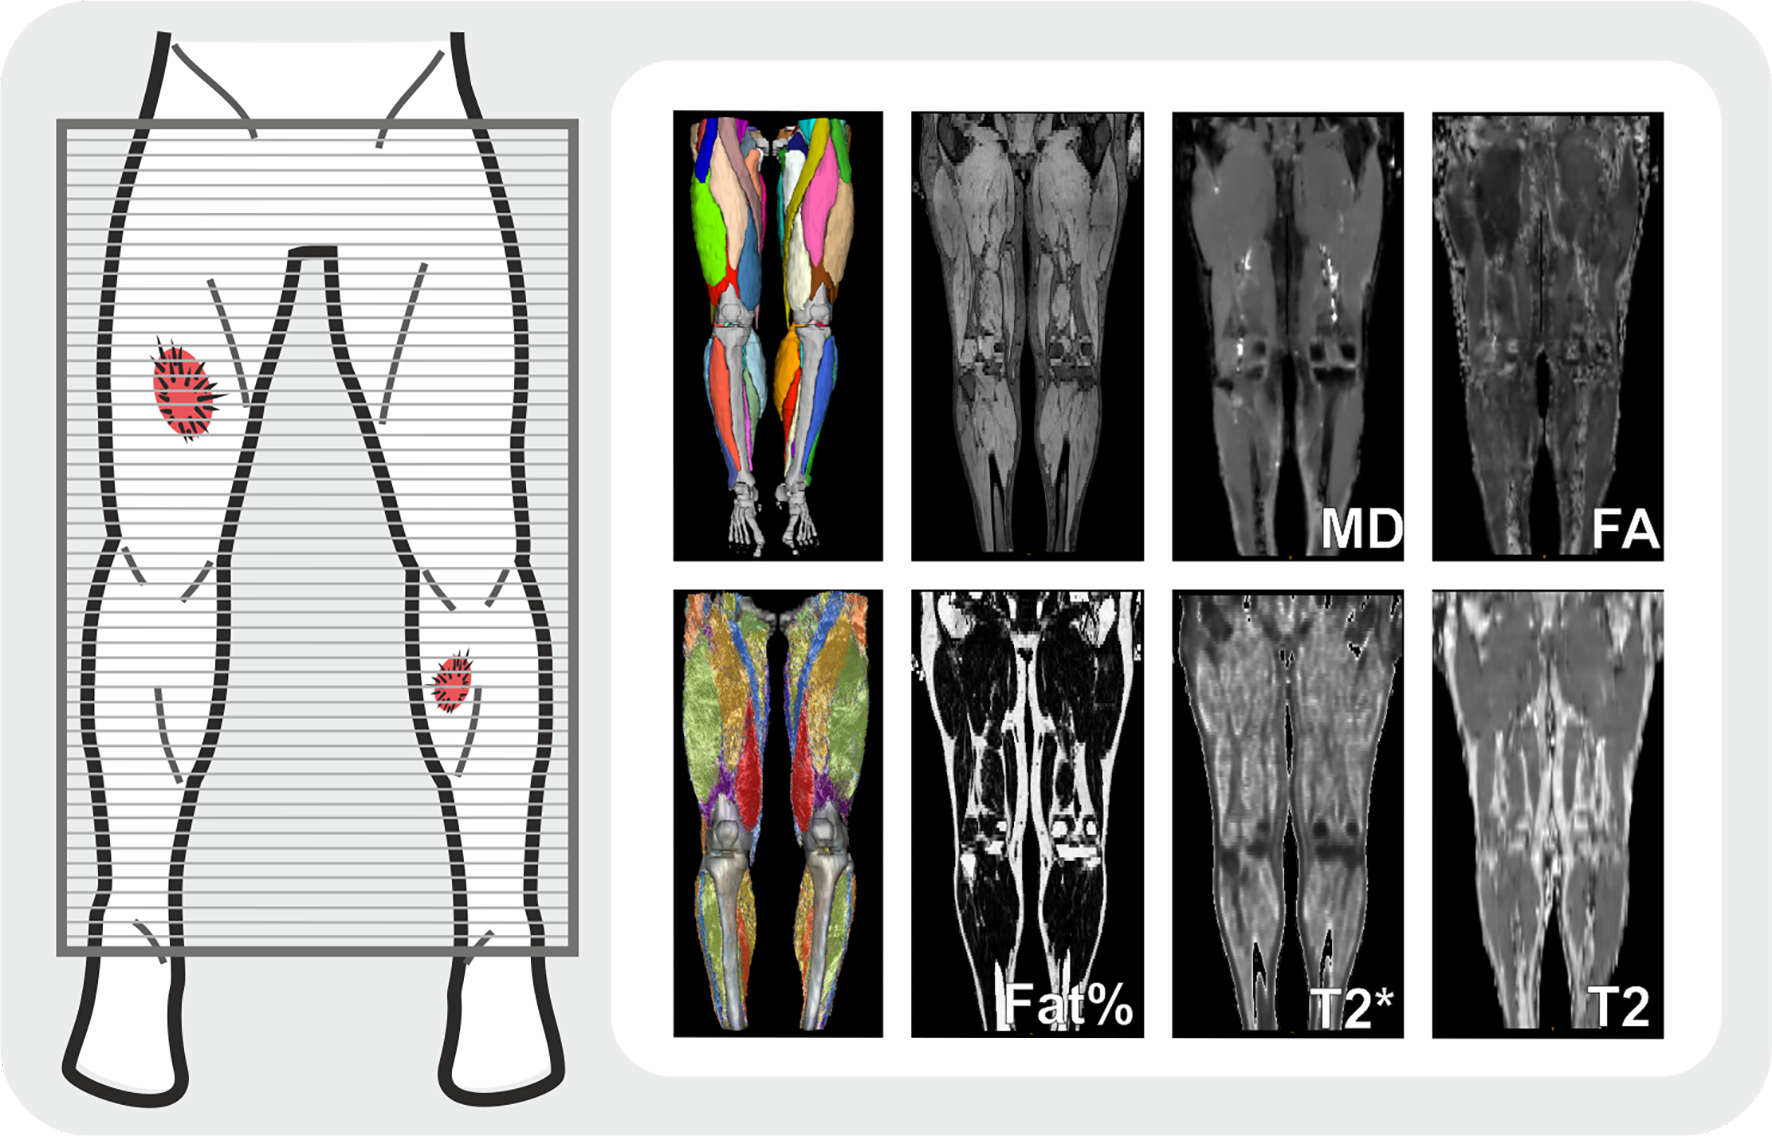 Bilateral acquisition of quantitative muscle MRI data of the whole leg